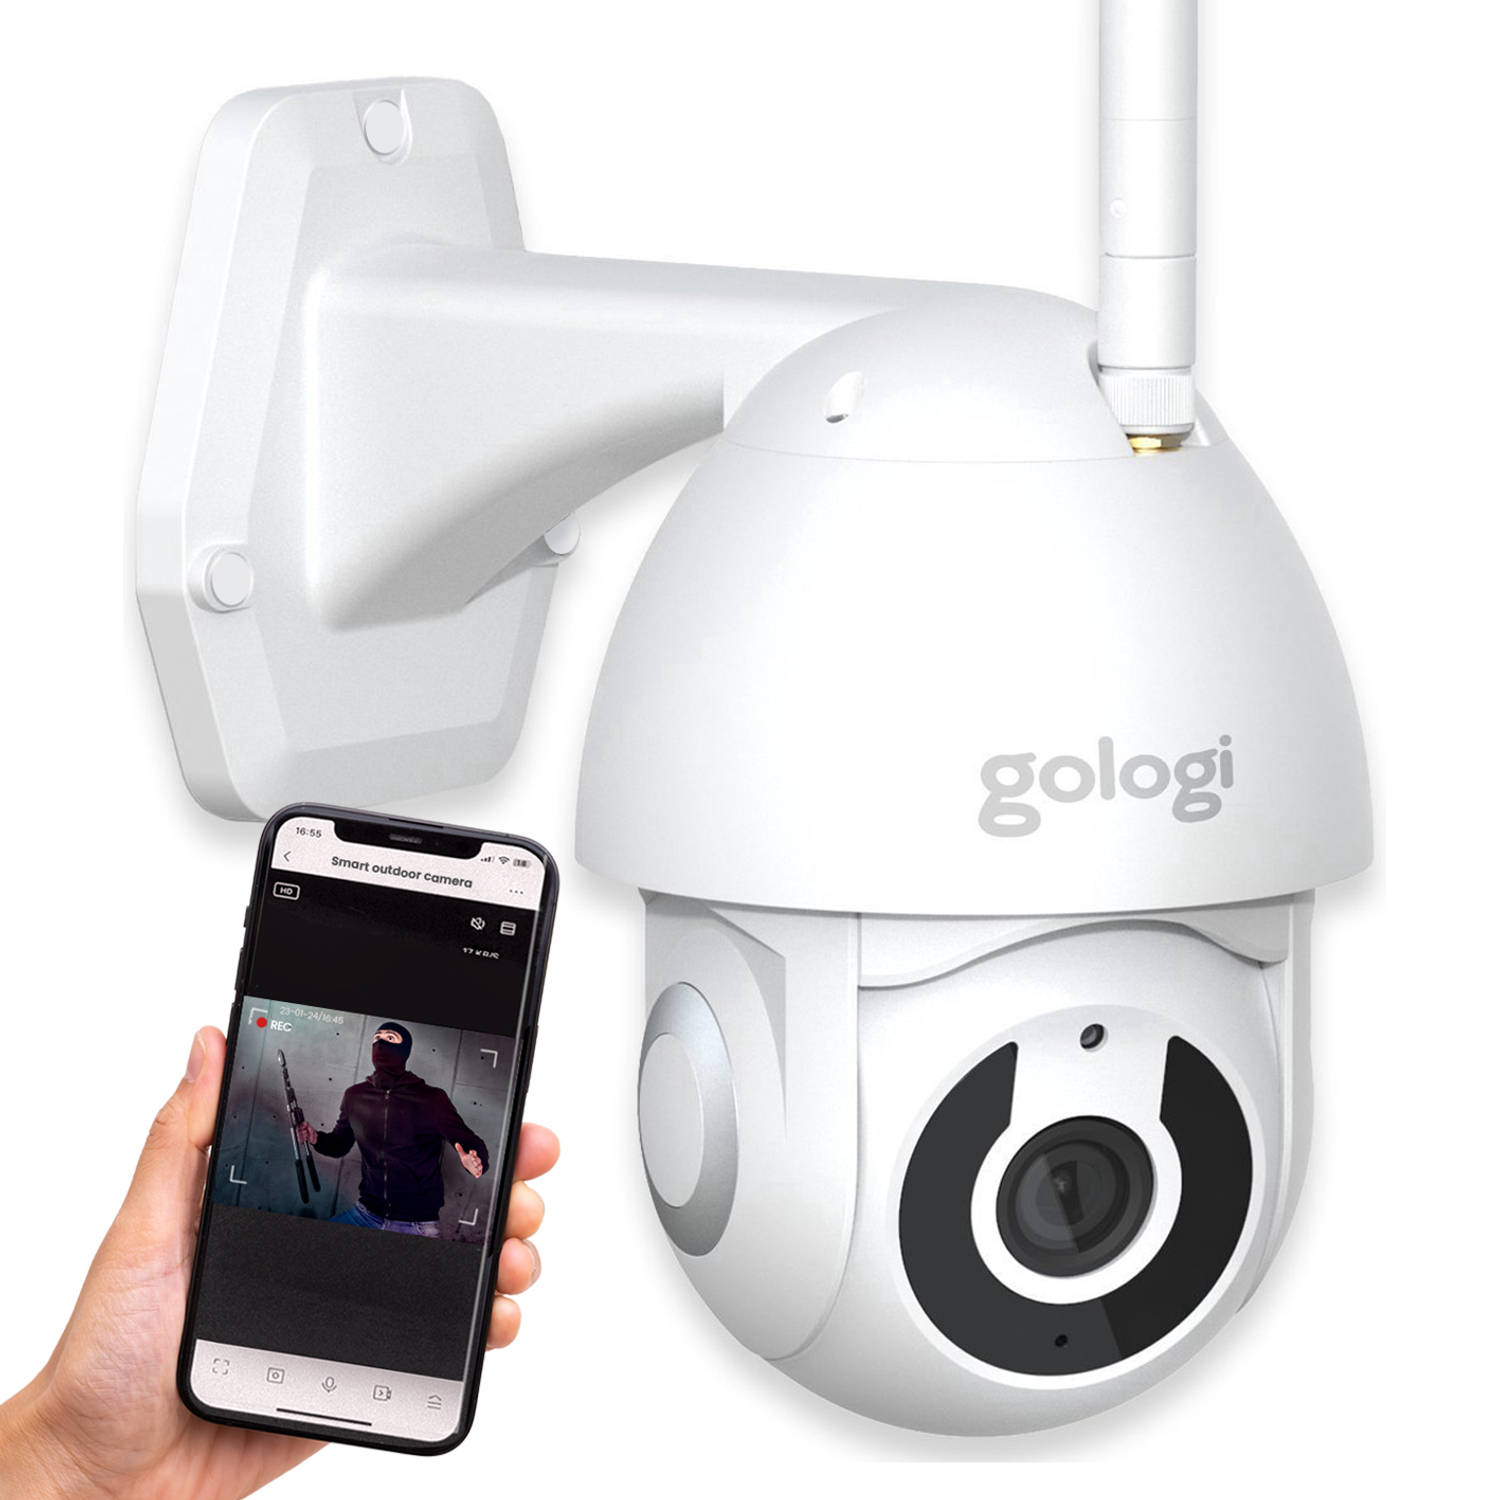 Gologi Superior Outdoorcamera Nachtzicht Beveiligingscamera 3MP Met wifi en app Met 32GB SD-kaart Wi